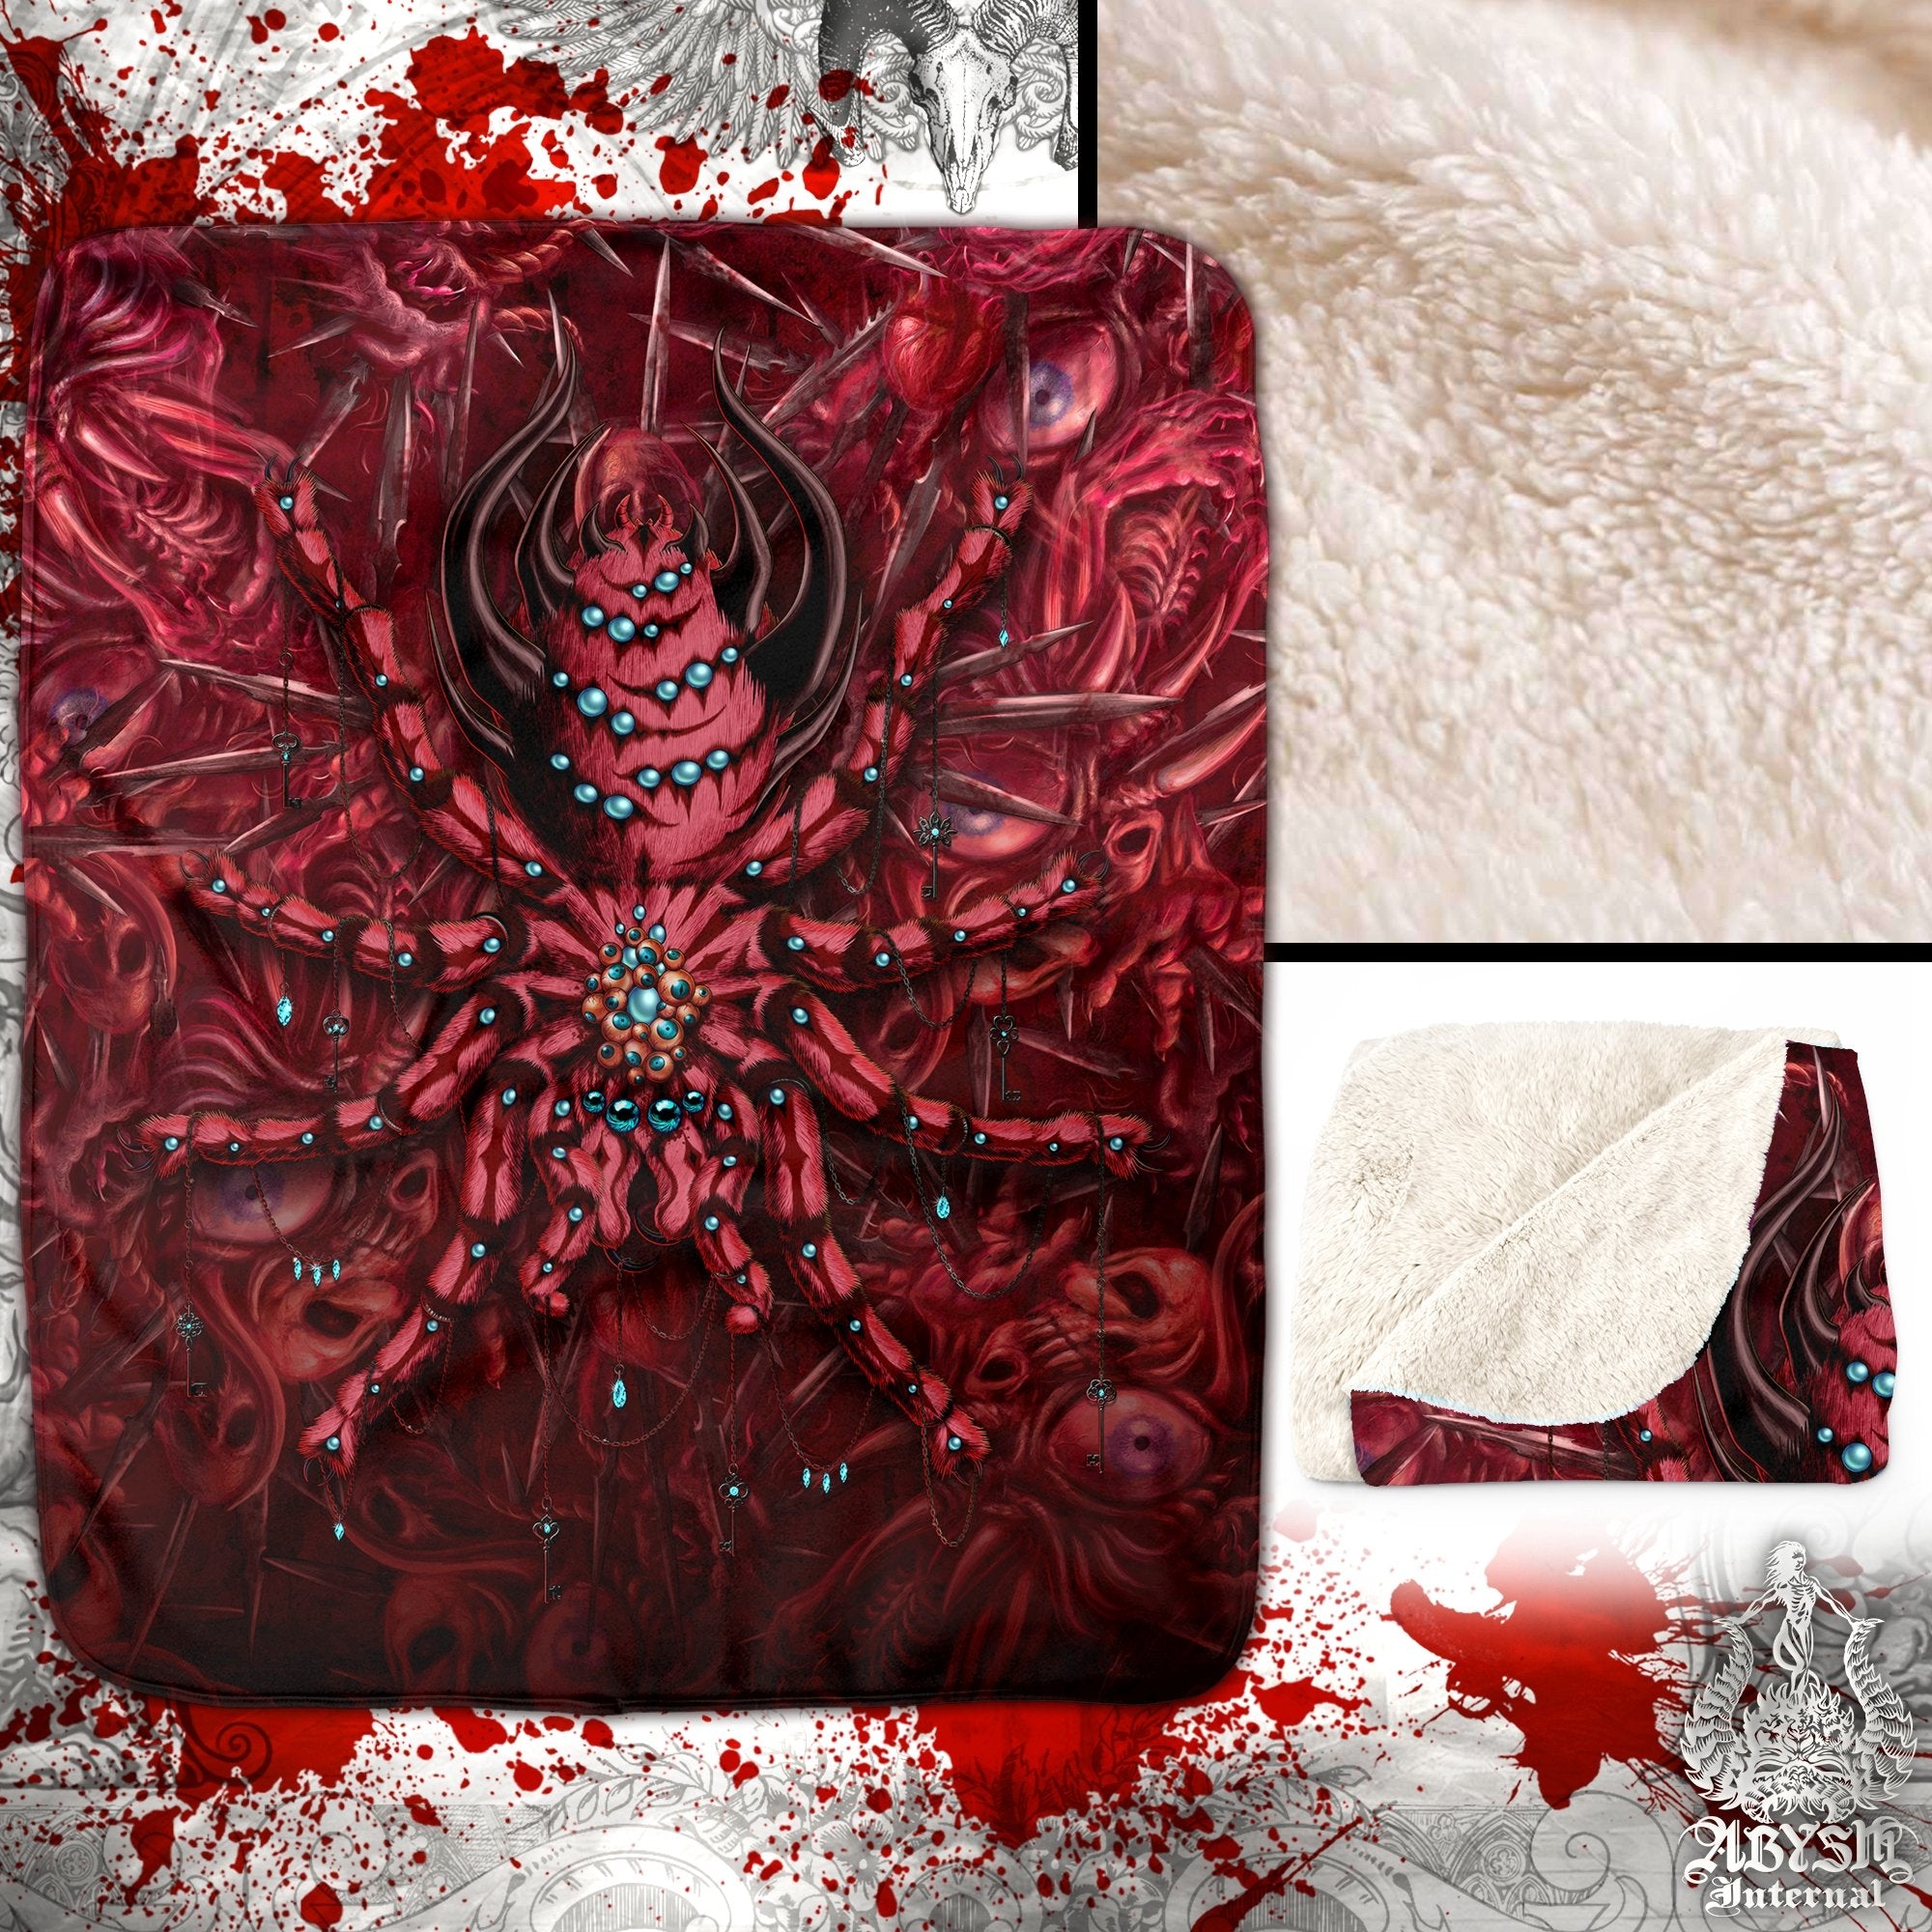 Horror Throw Fleece Blanket, Halloween Home Decor - Spider, Gore and Blood, Tarantula Art - Abysm Internal